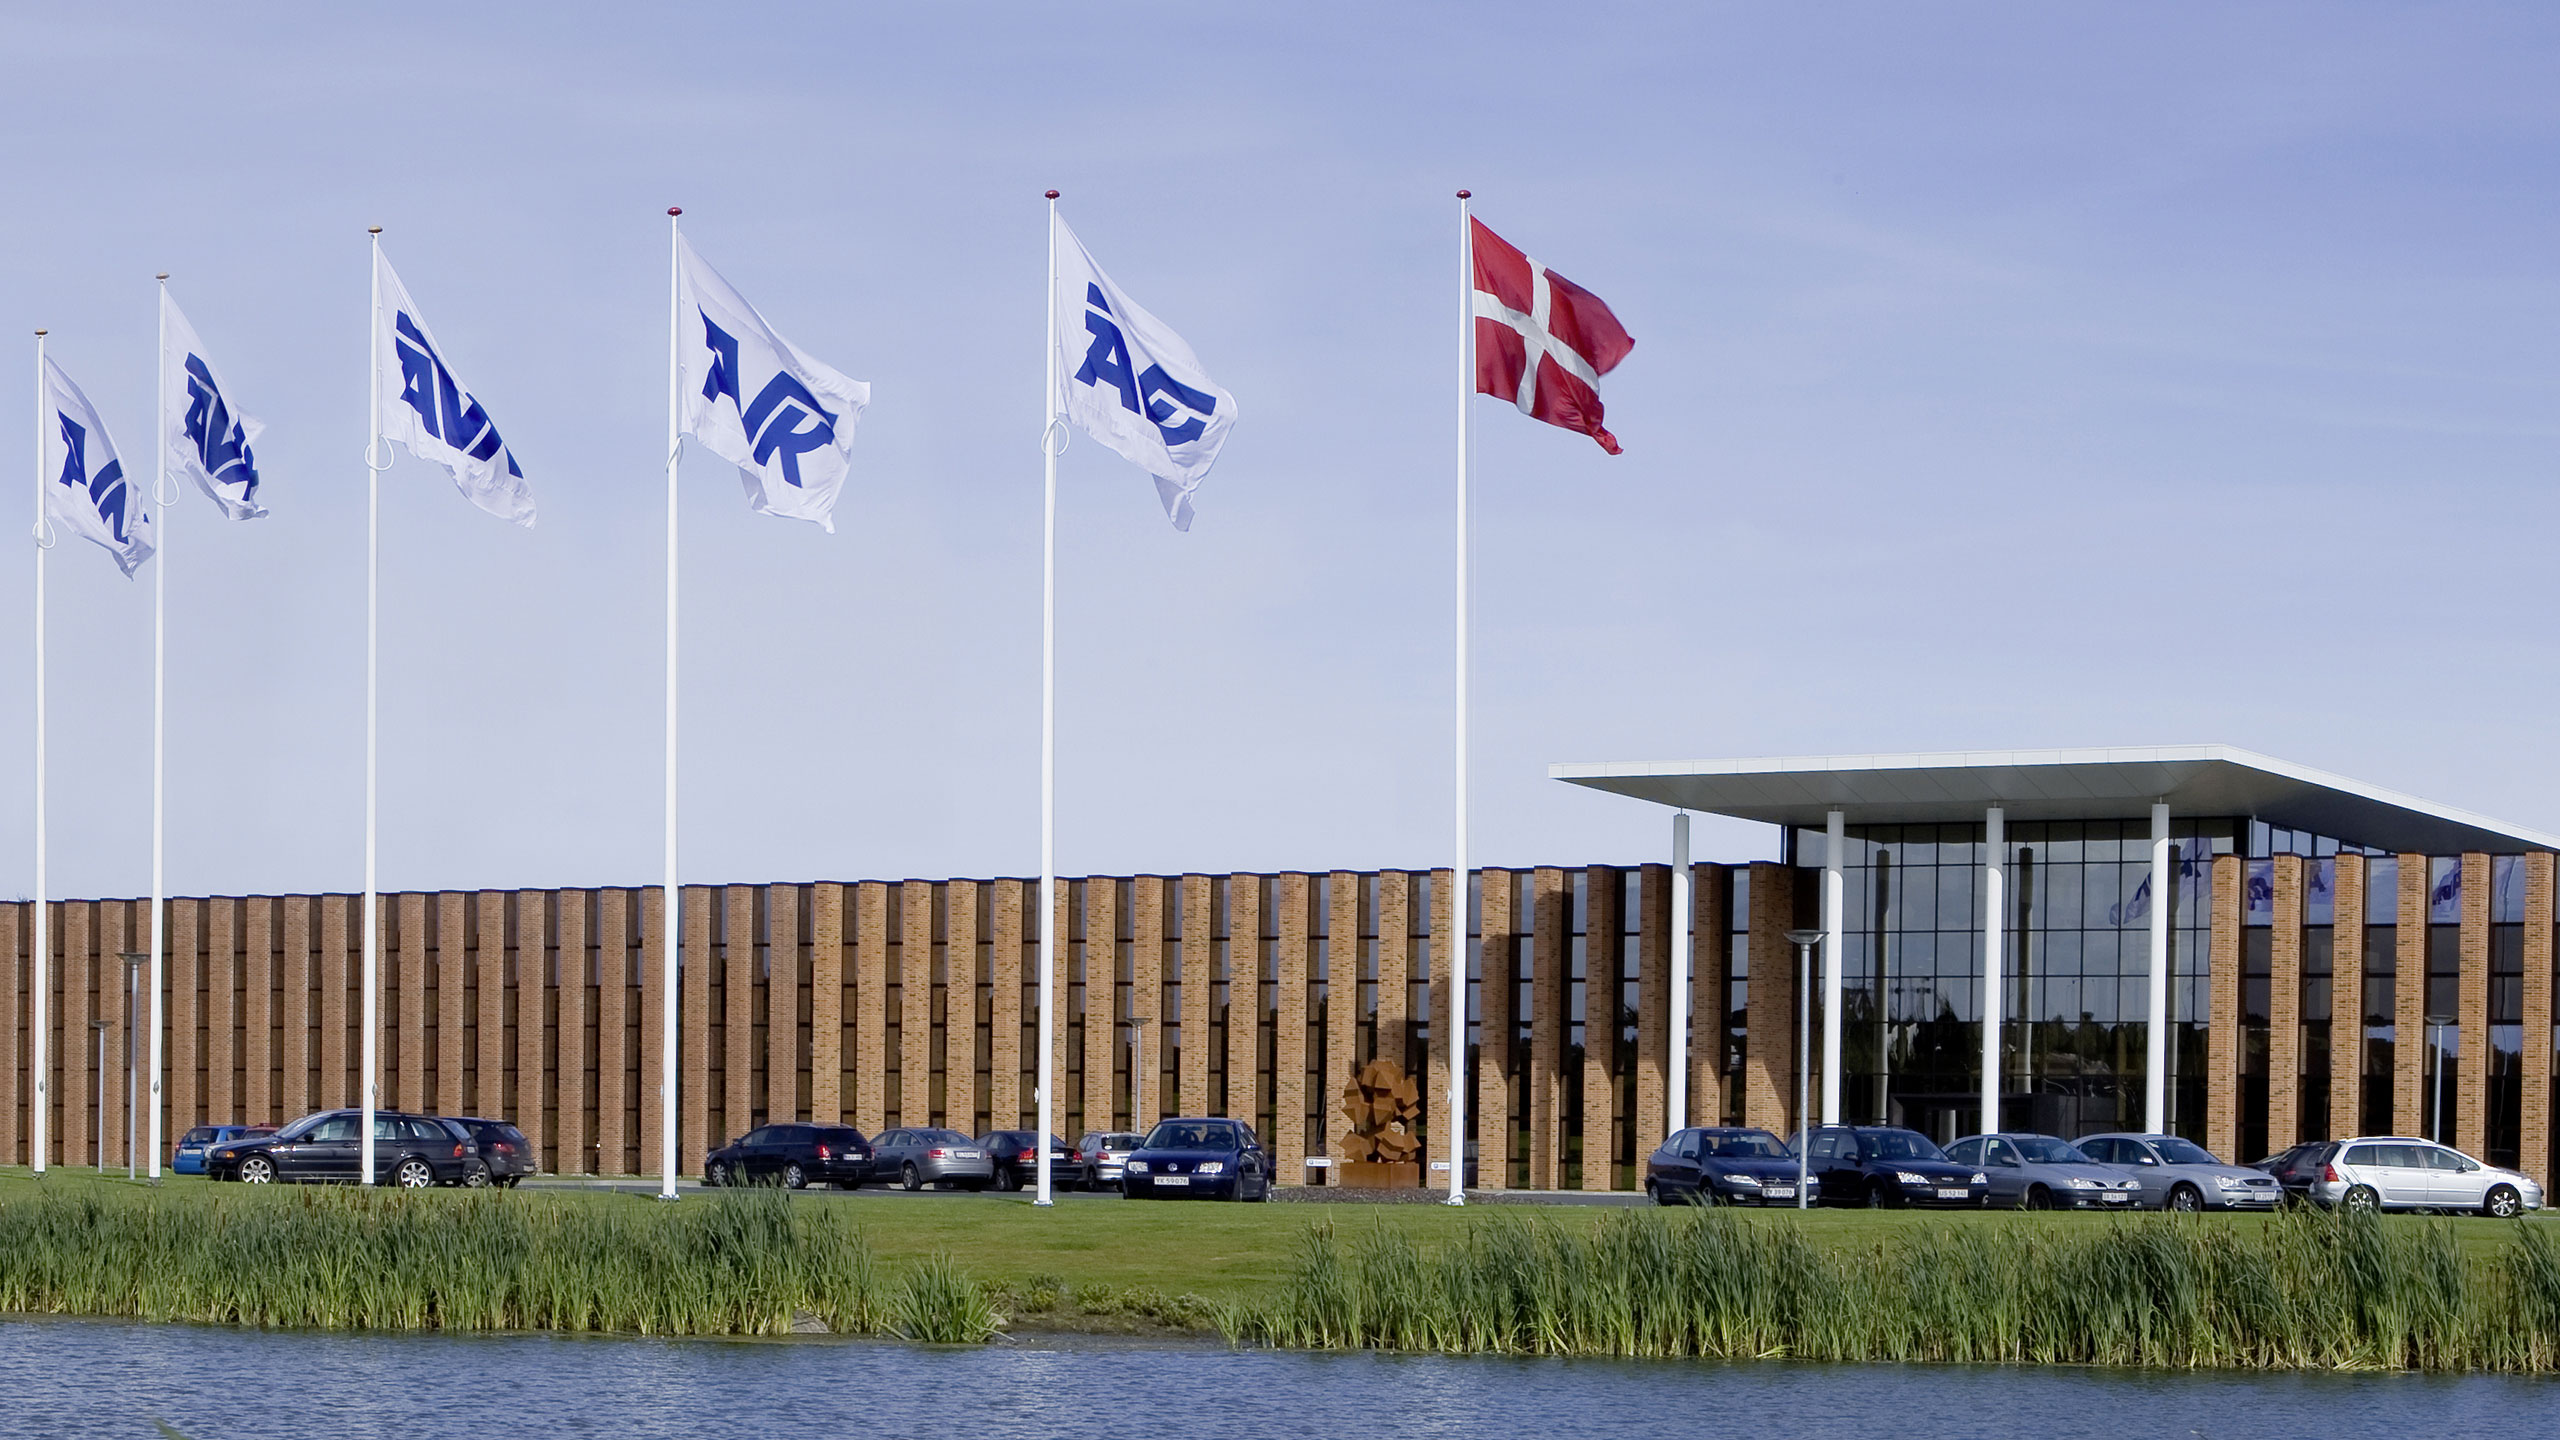 AVK headquarter in Skovby Denmark